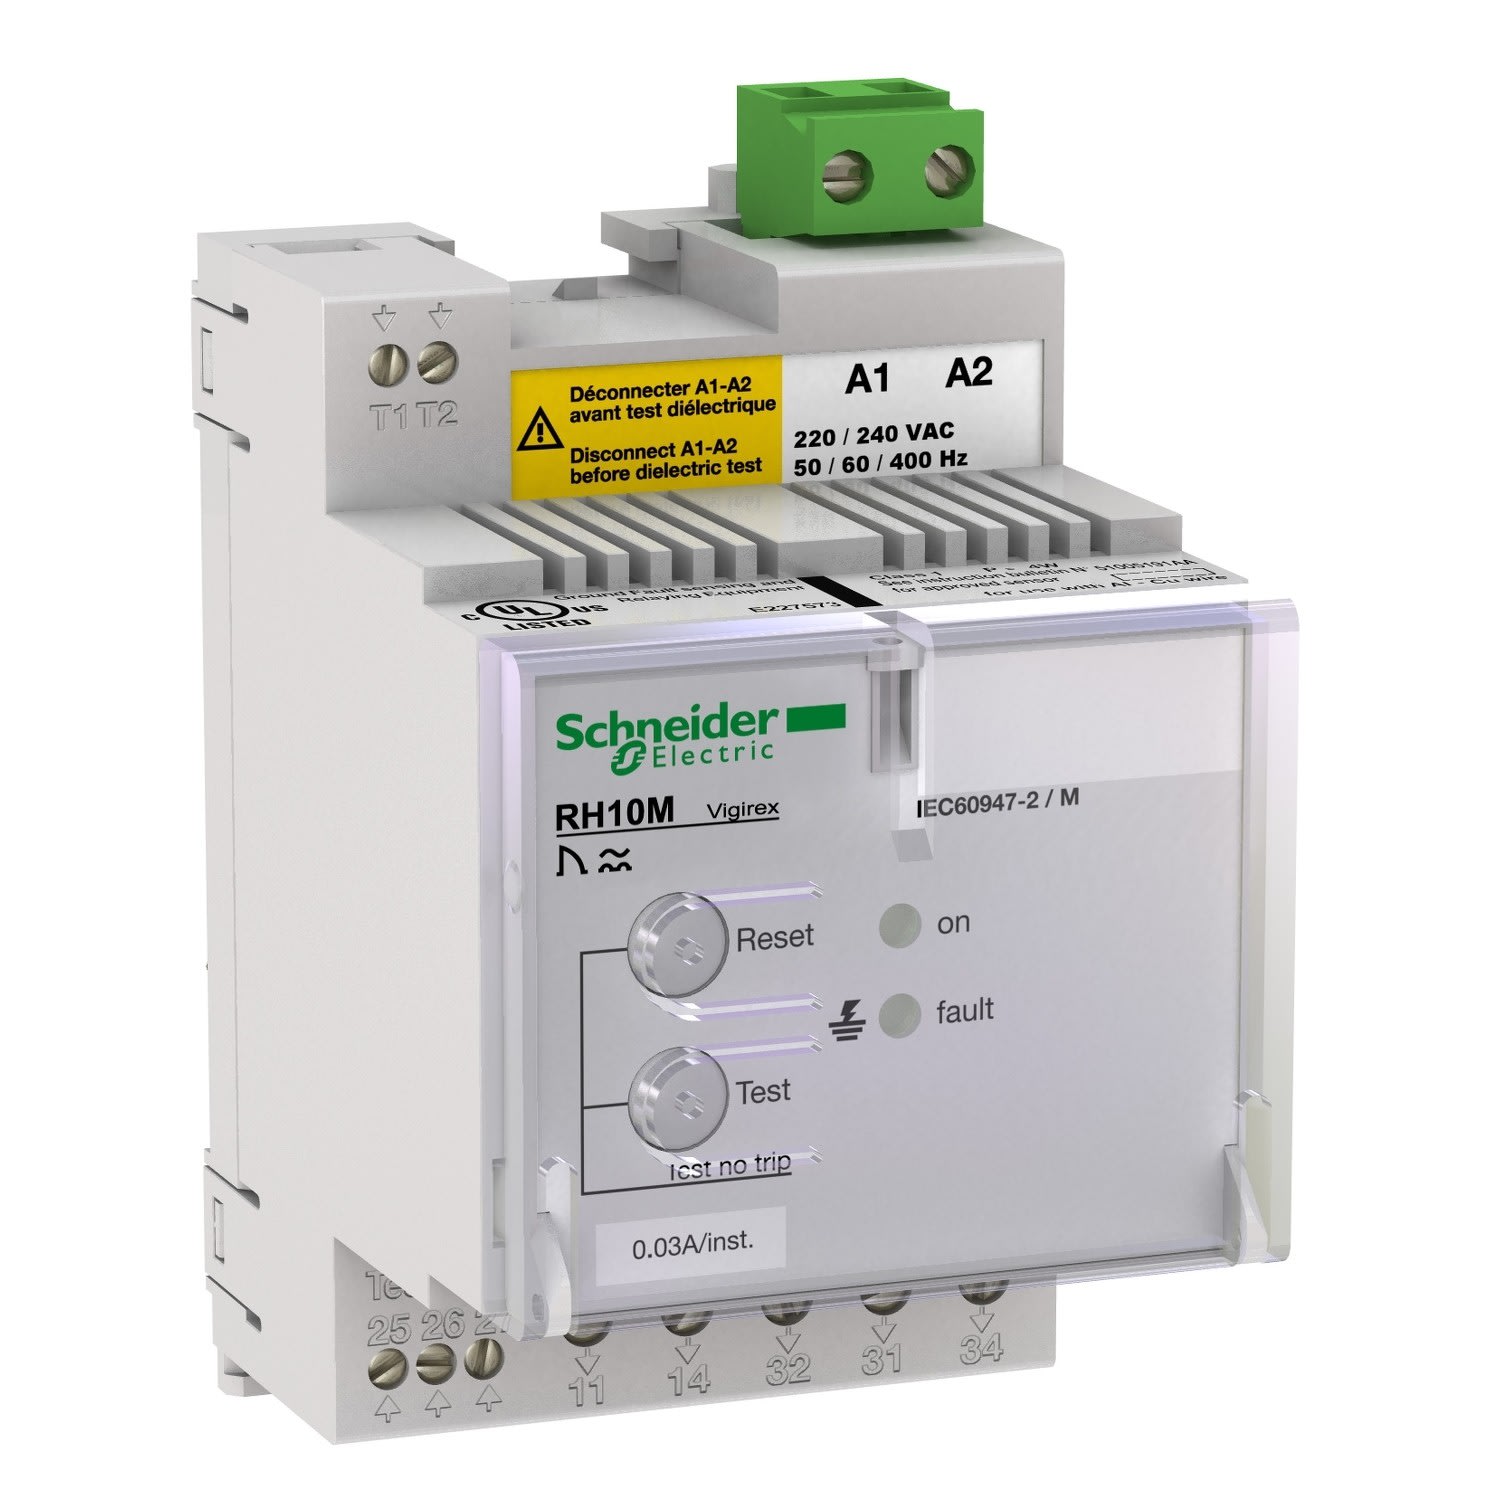 Schneider Electric - Vigirex RH10M 110-130VAC sensibilite 0,03A instantane